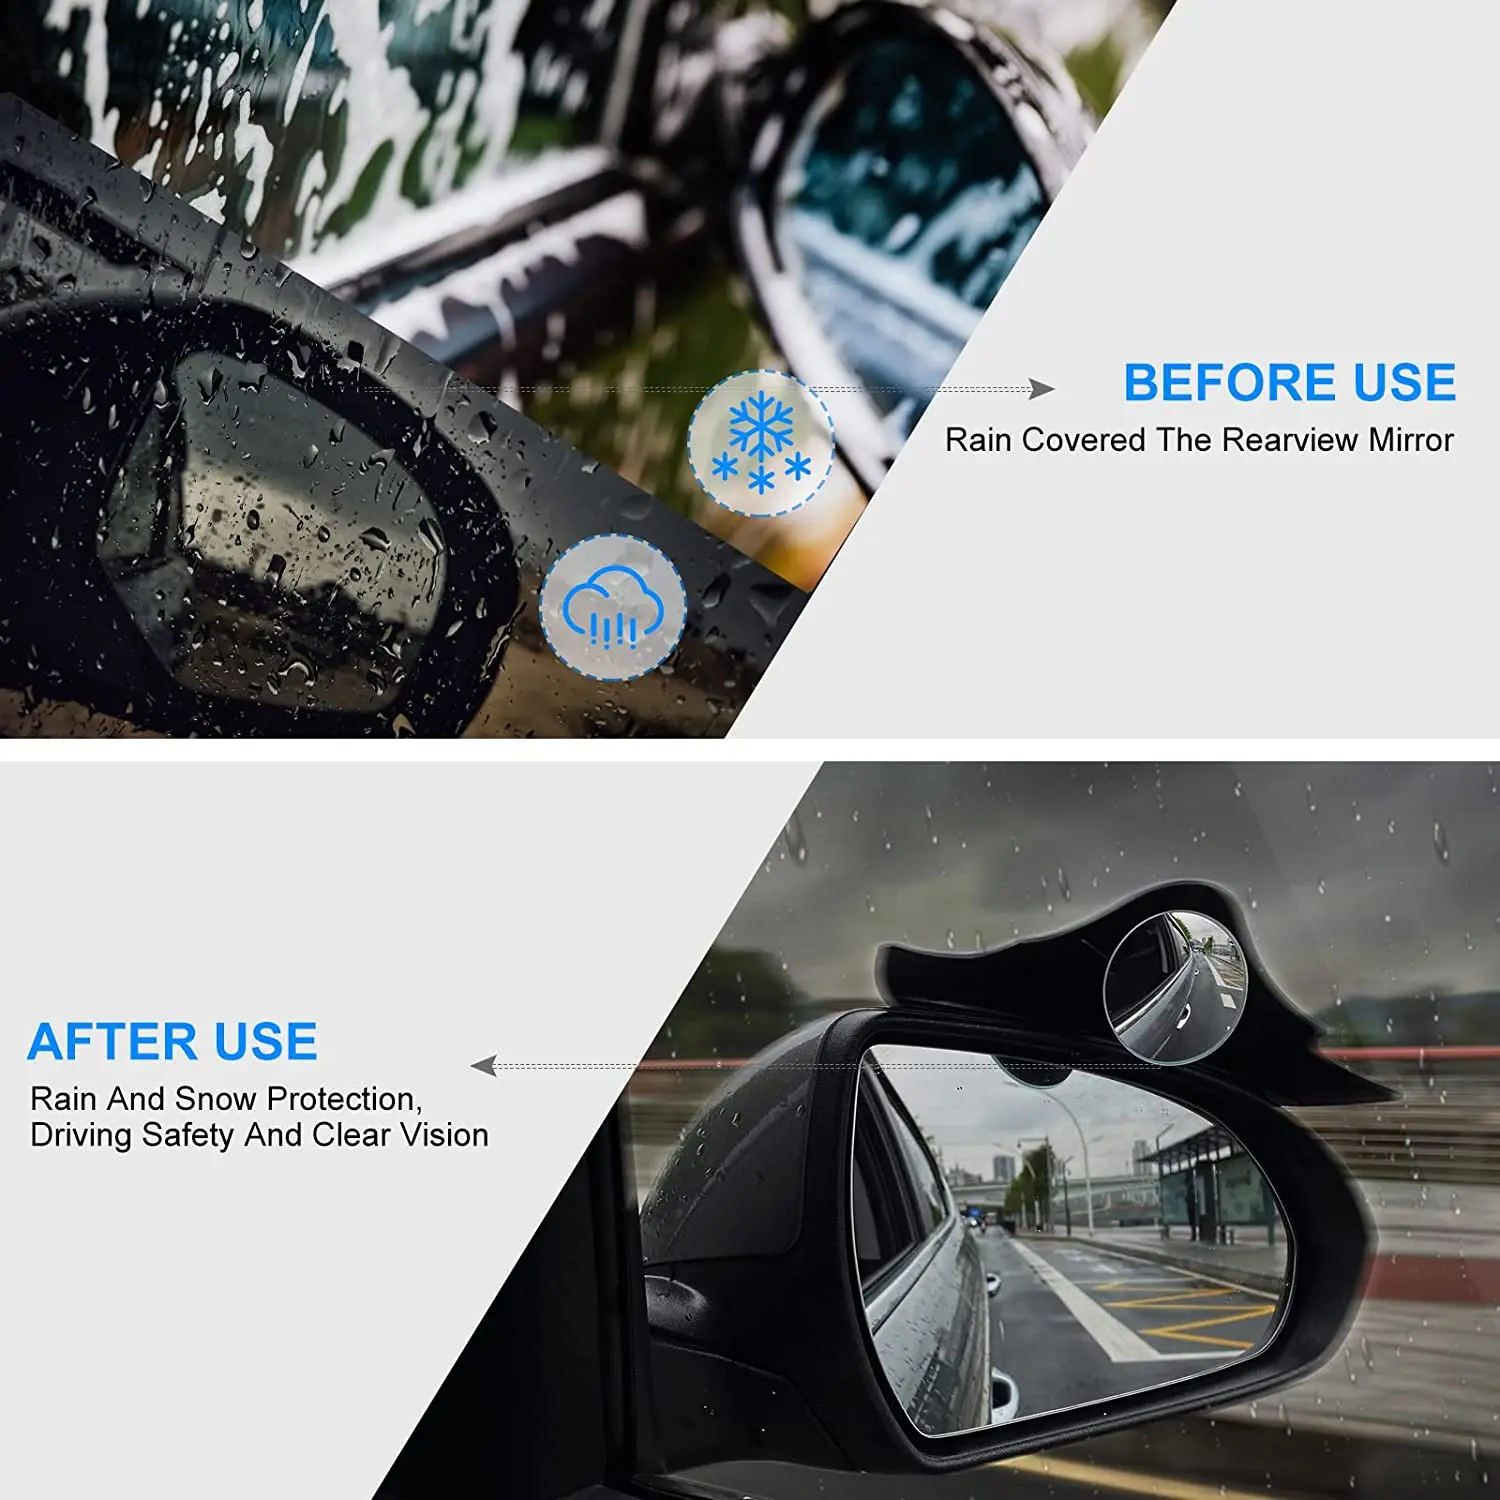  2PCS Smoke Visor Guards for Car Side Mirrors - Waterproof  Carbon Fiber Auto Rain Eyebrows for Cars, Trucks and SUVs - Universal Fit  (Black) : Automotive